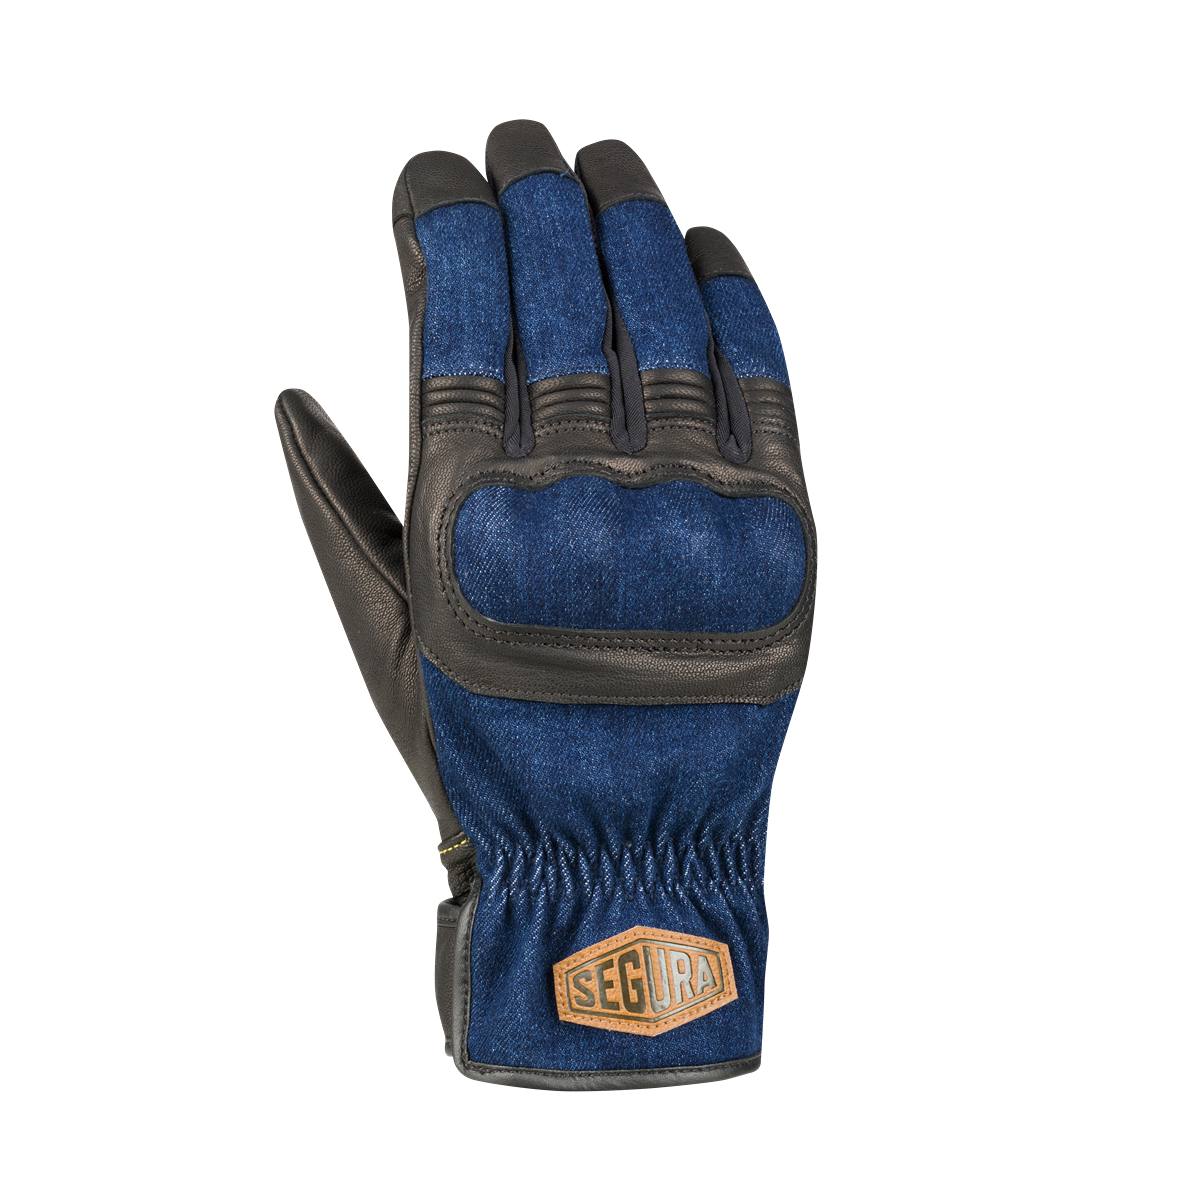 Image of Segura Hunky Gloves Black Blue Size T8 ID 3660815190548